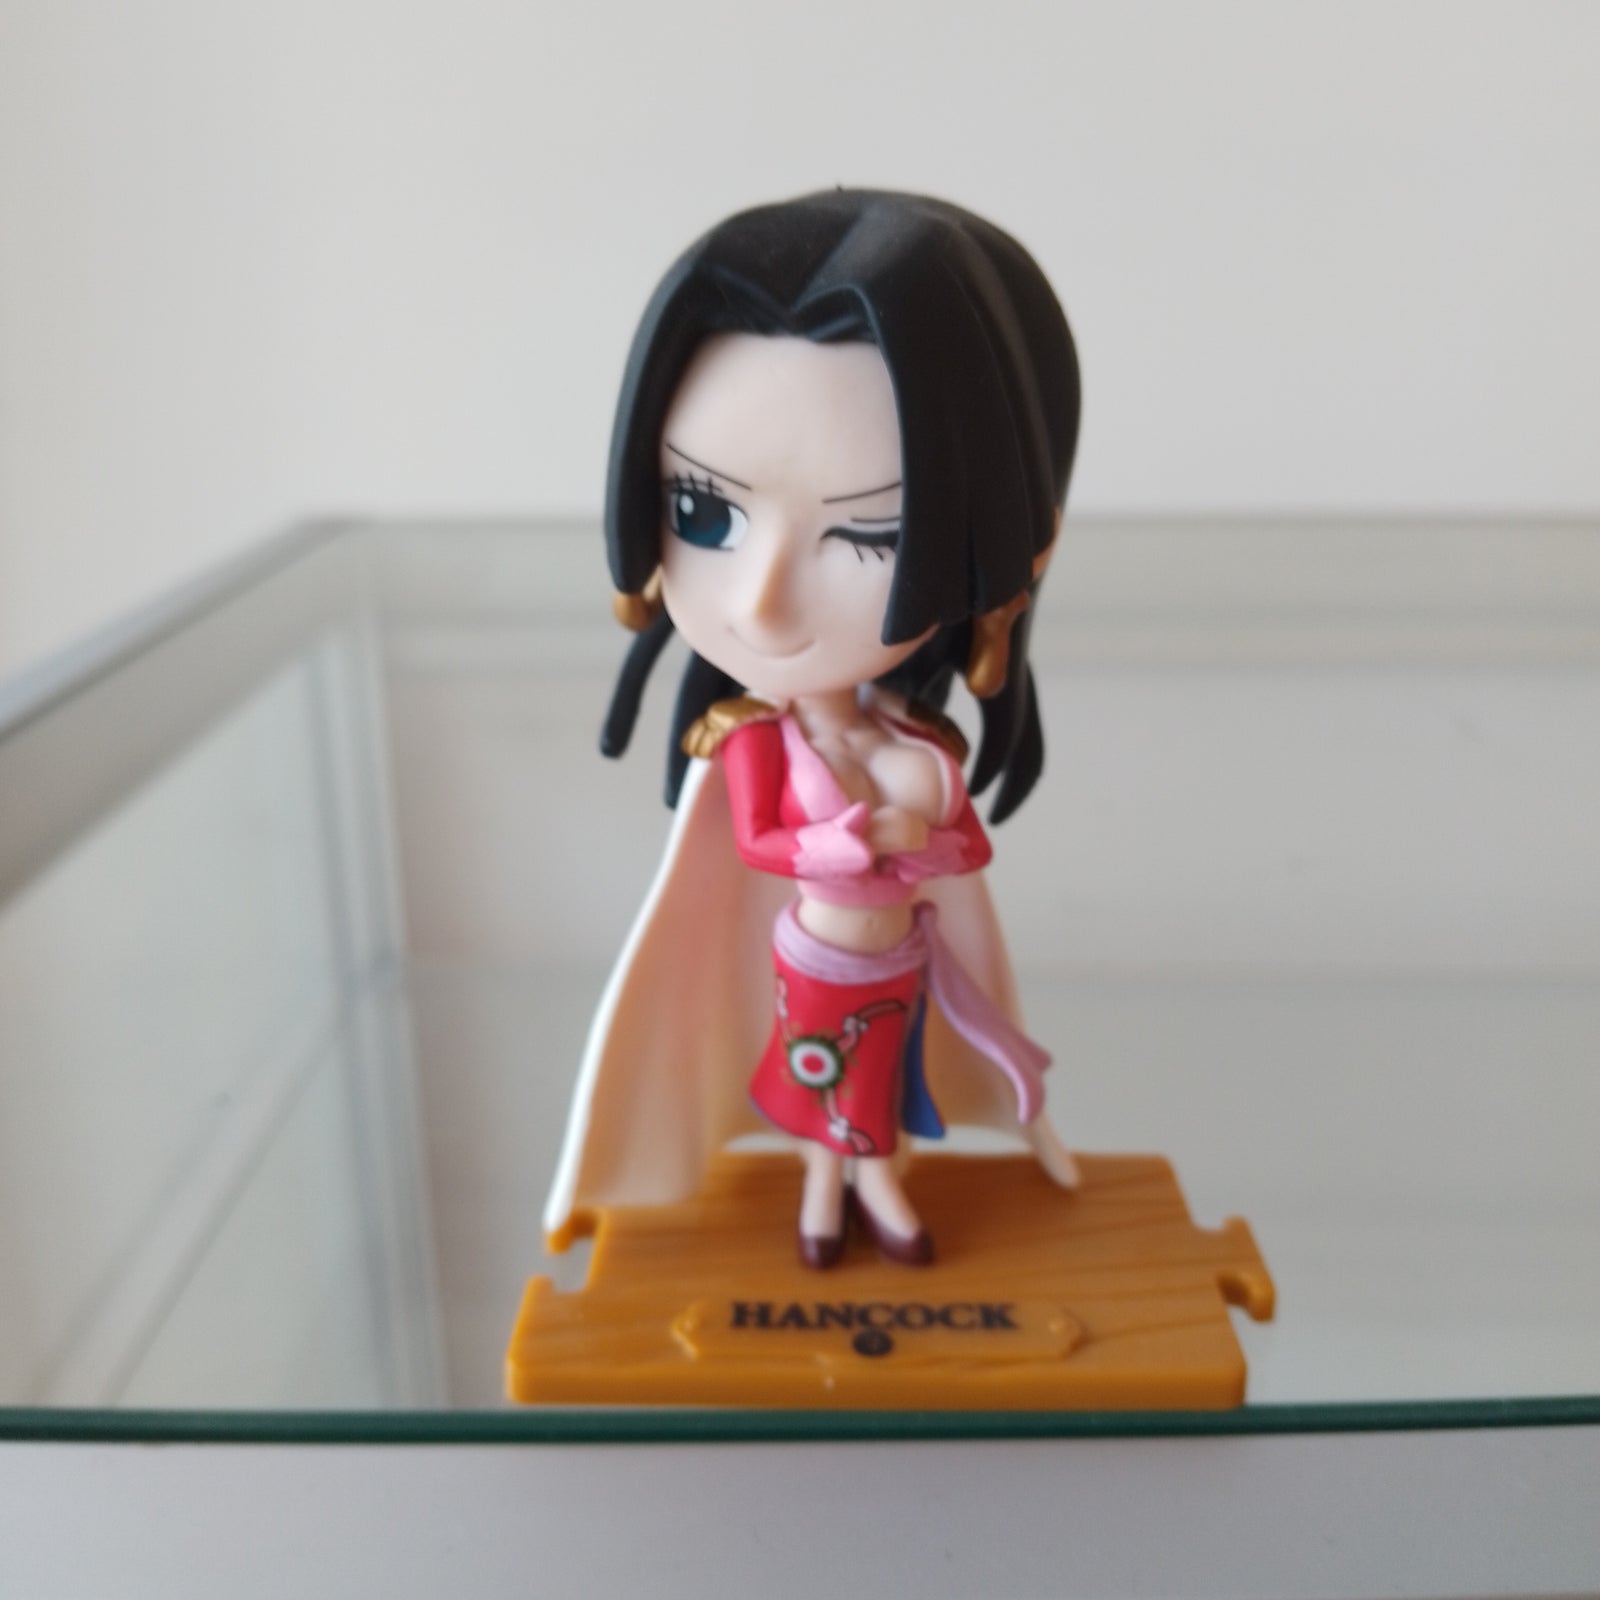 Hancock - One Piece Toy Figure